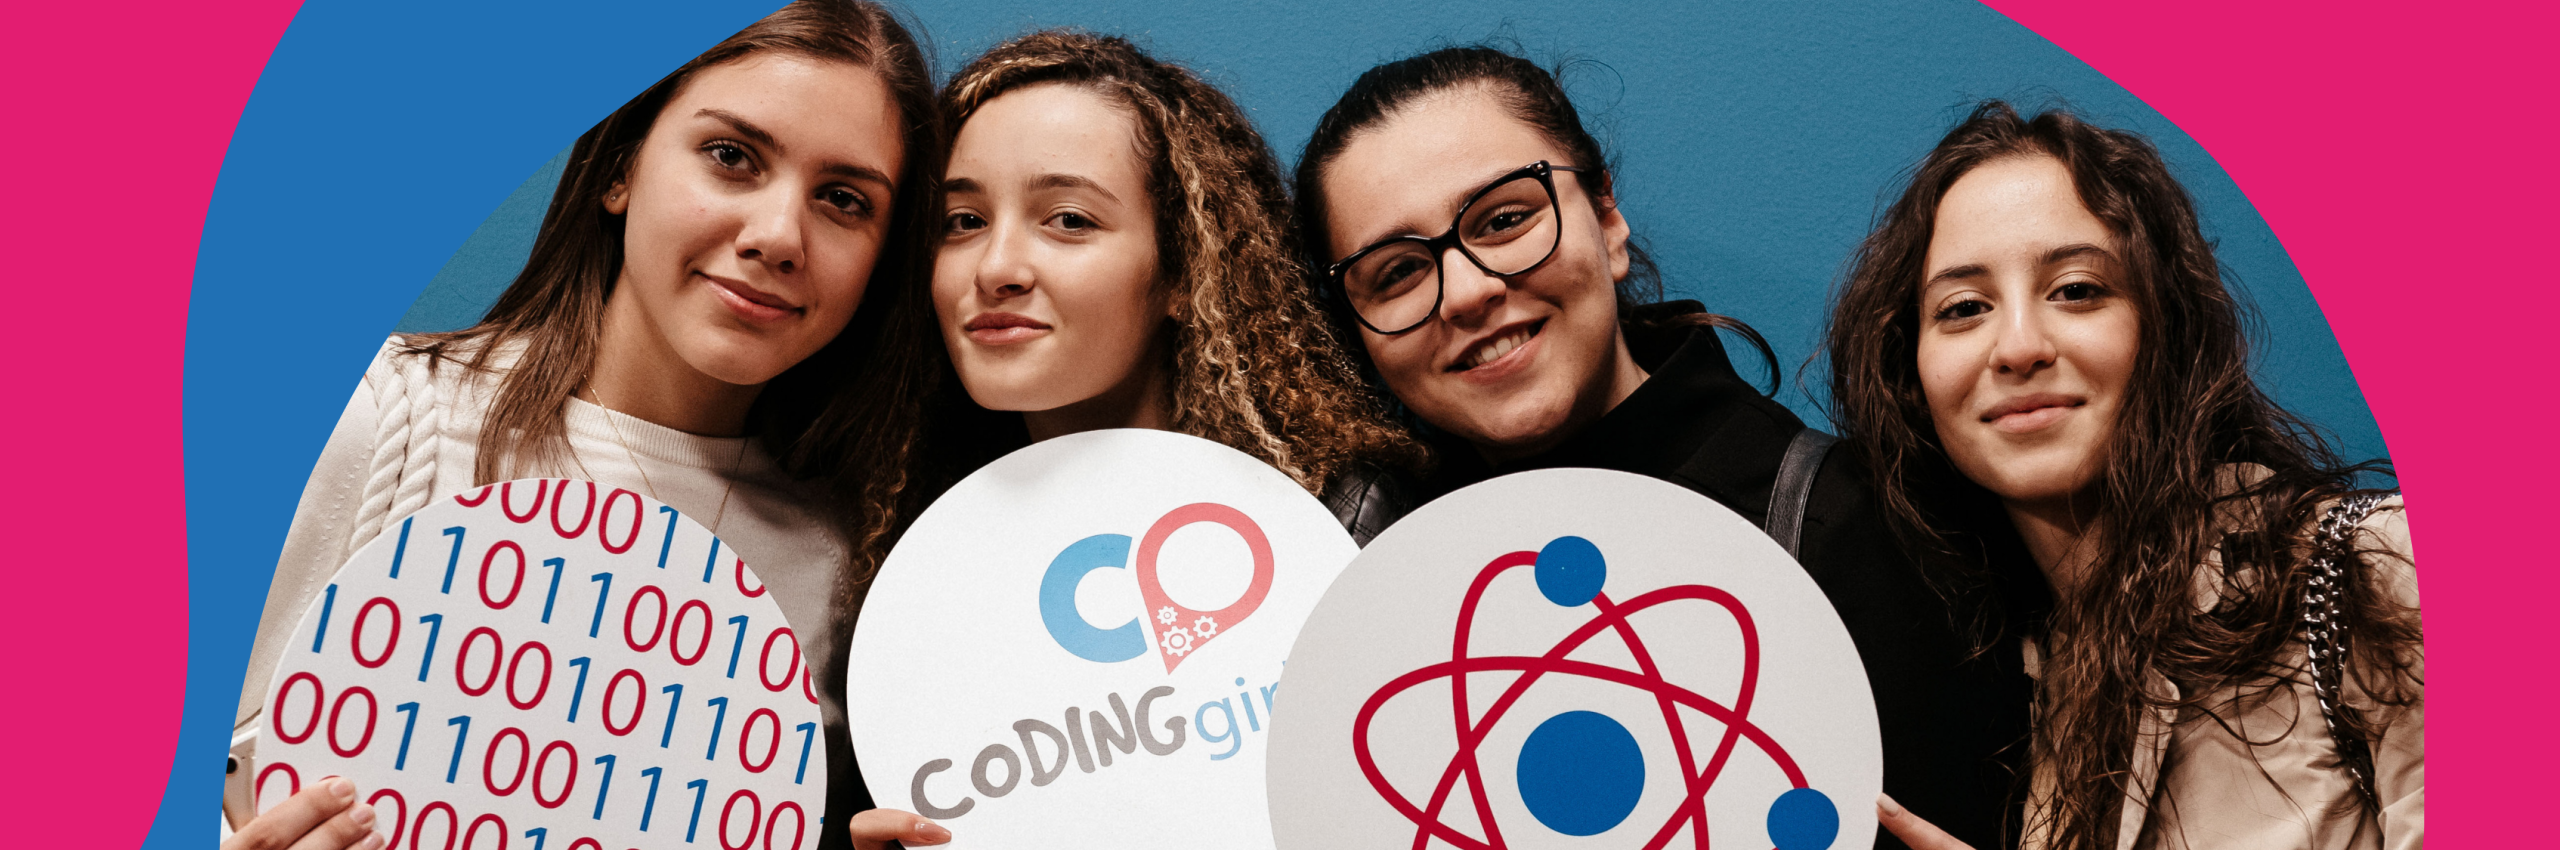 coding girls